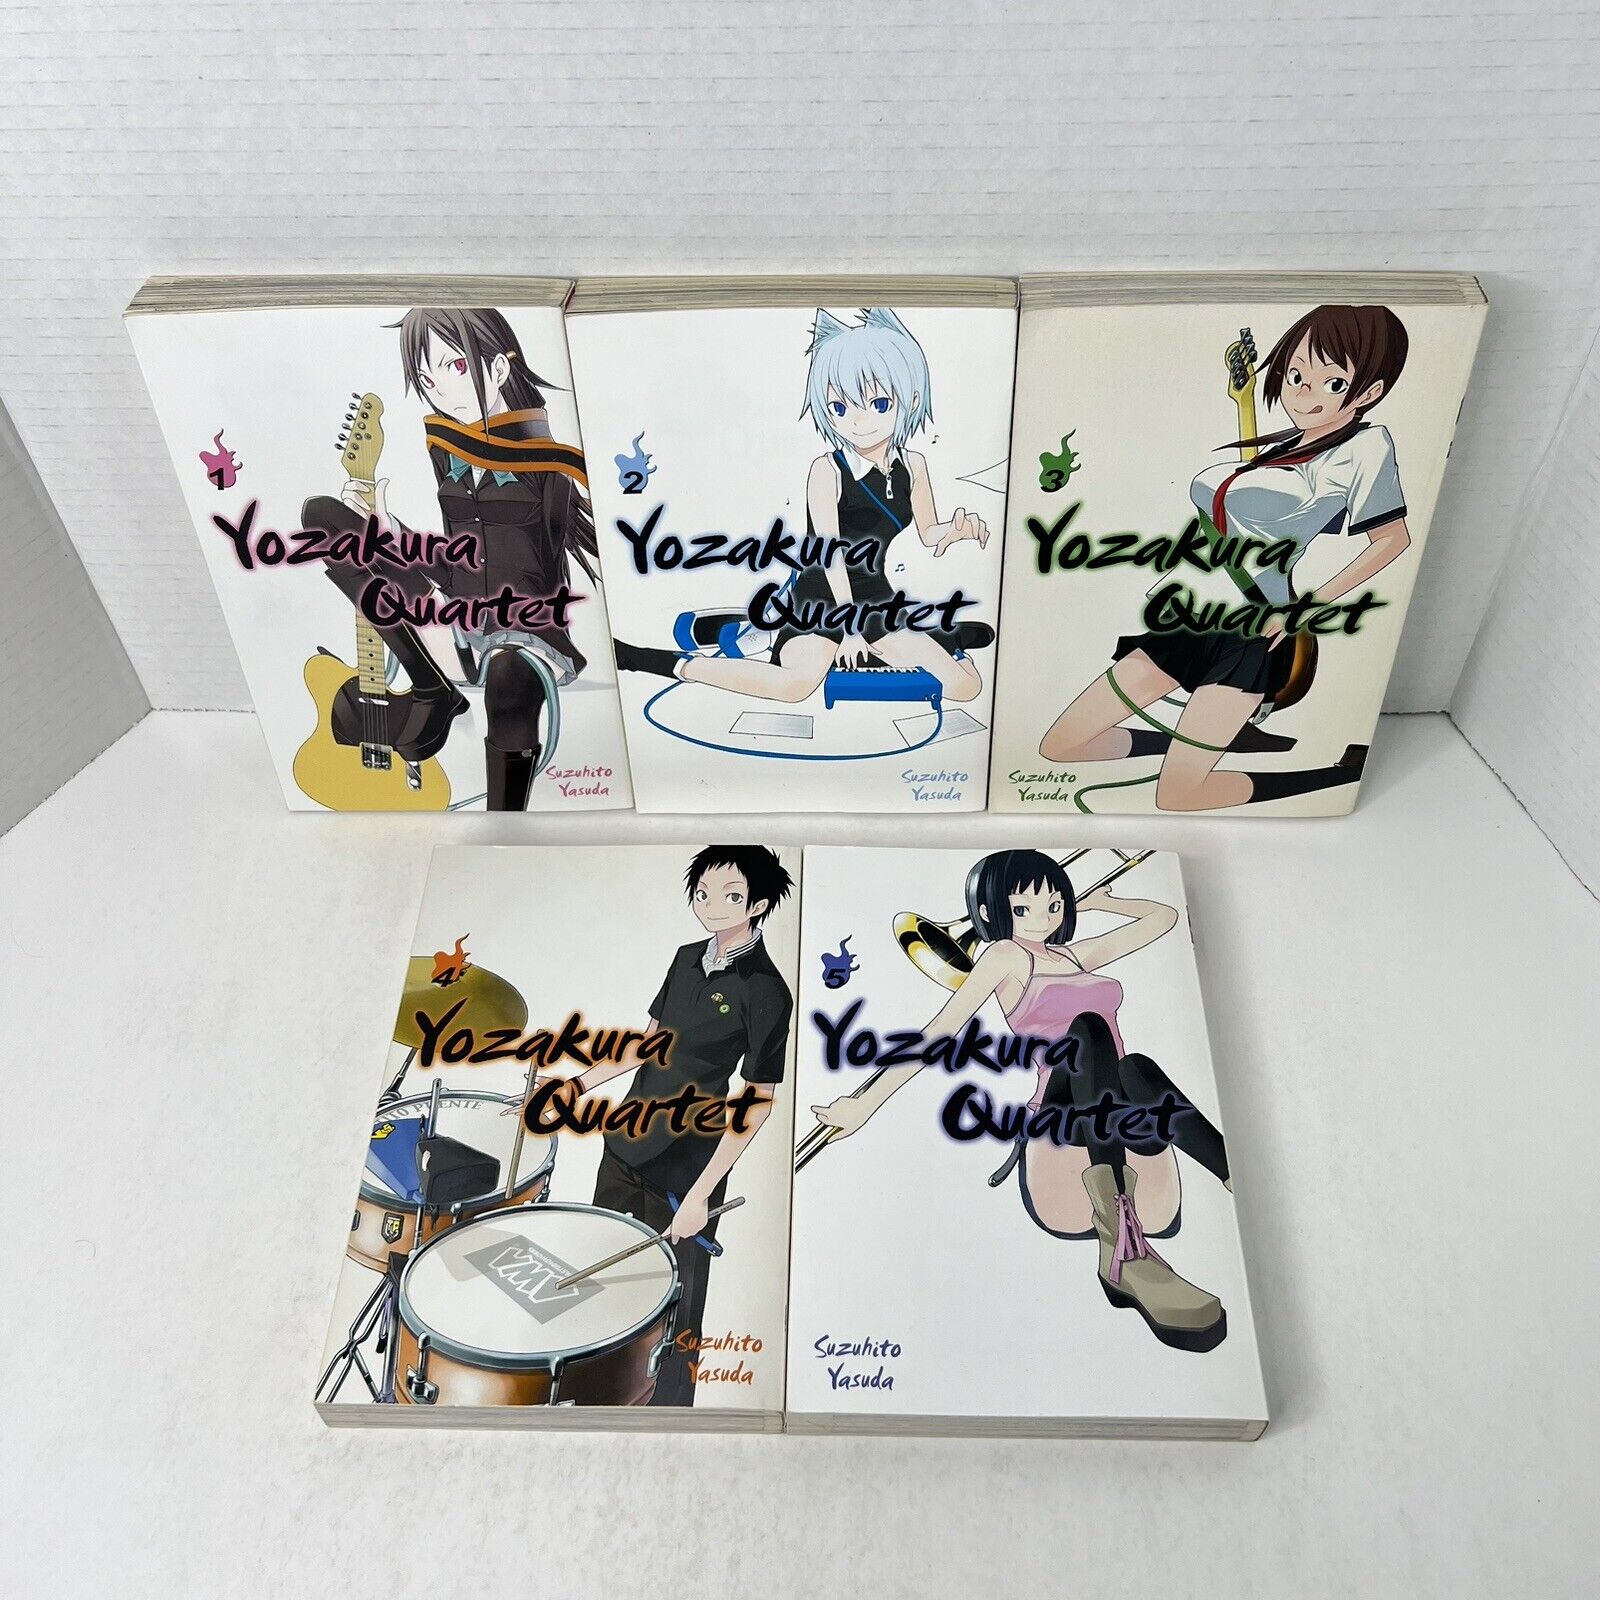 Yozakura Quartet English Manga Volumes #1-5 Set; Del Rey by Suzuhito Yasuda